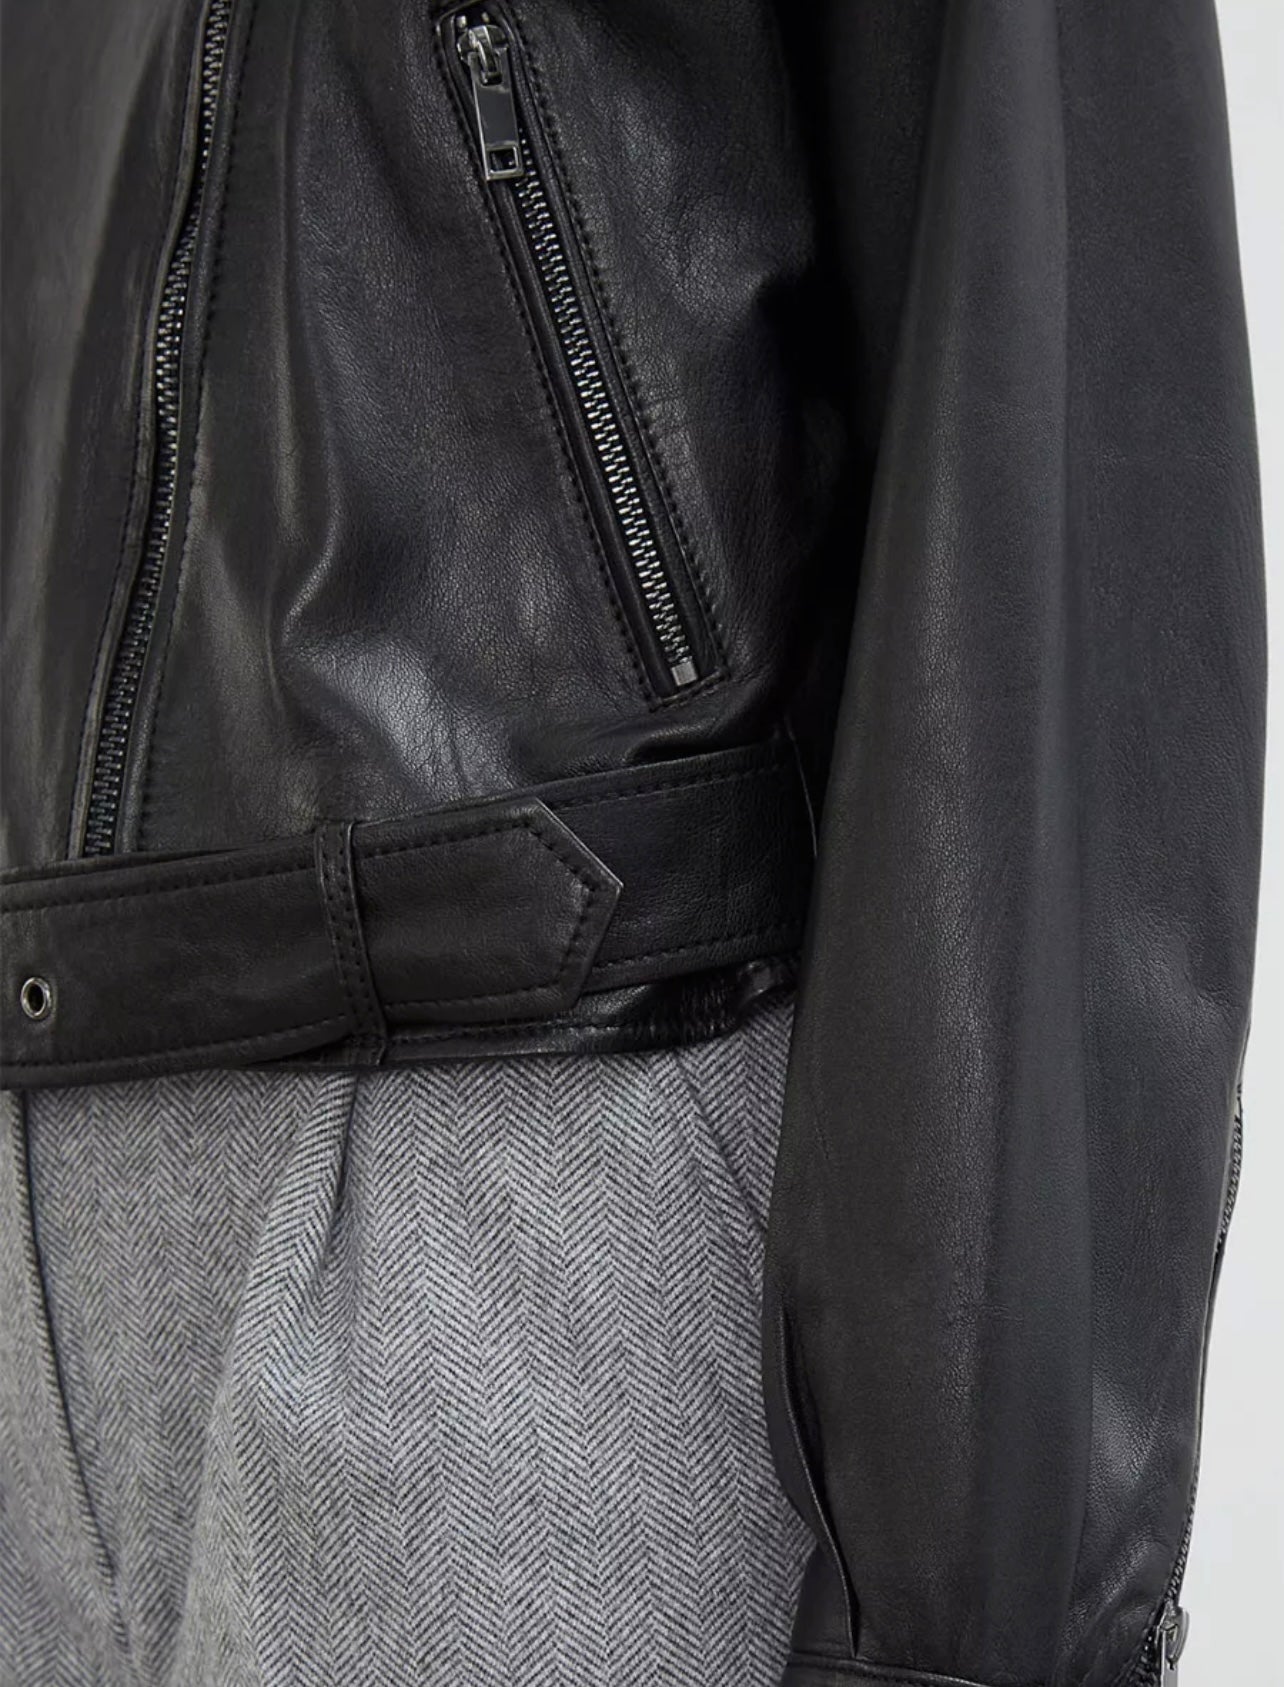 Black Leather Jacket Double Style Geaca din piele stil dublu